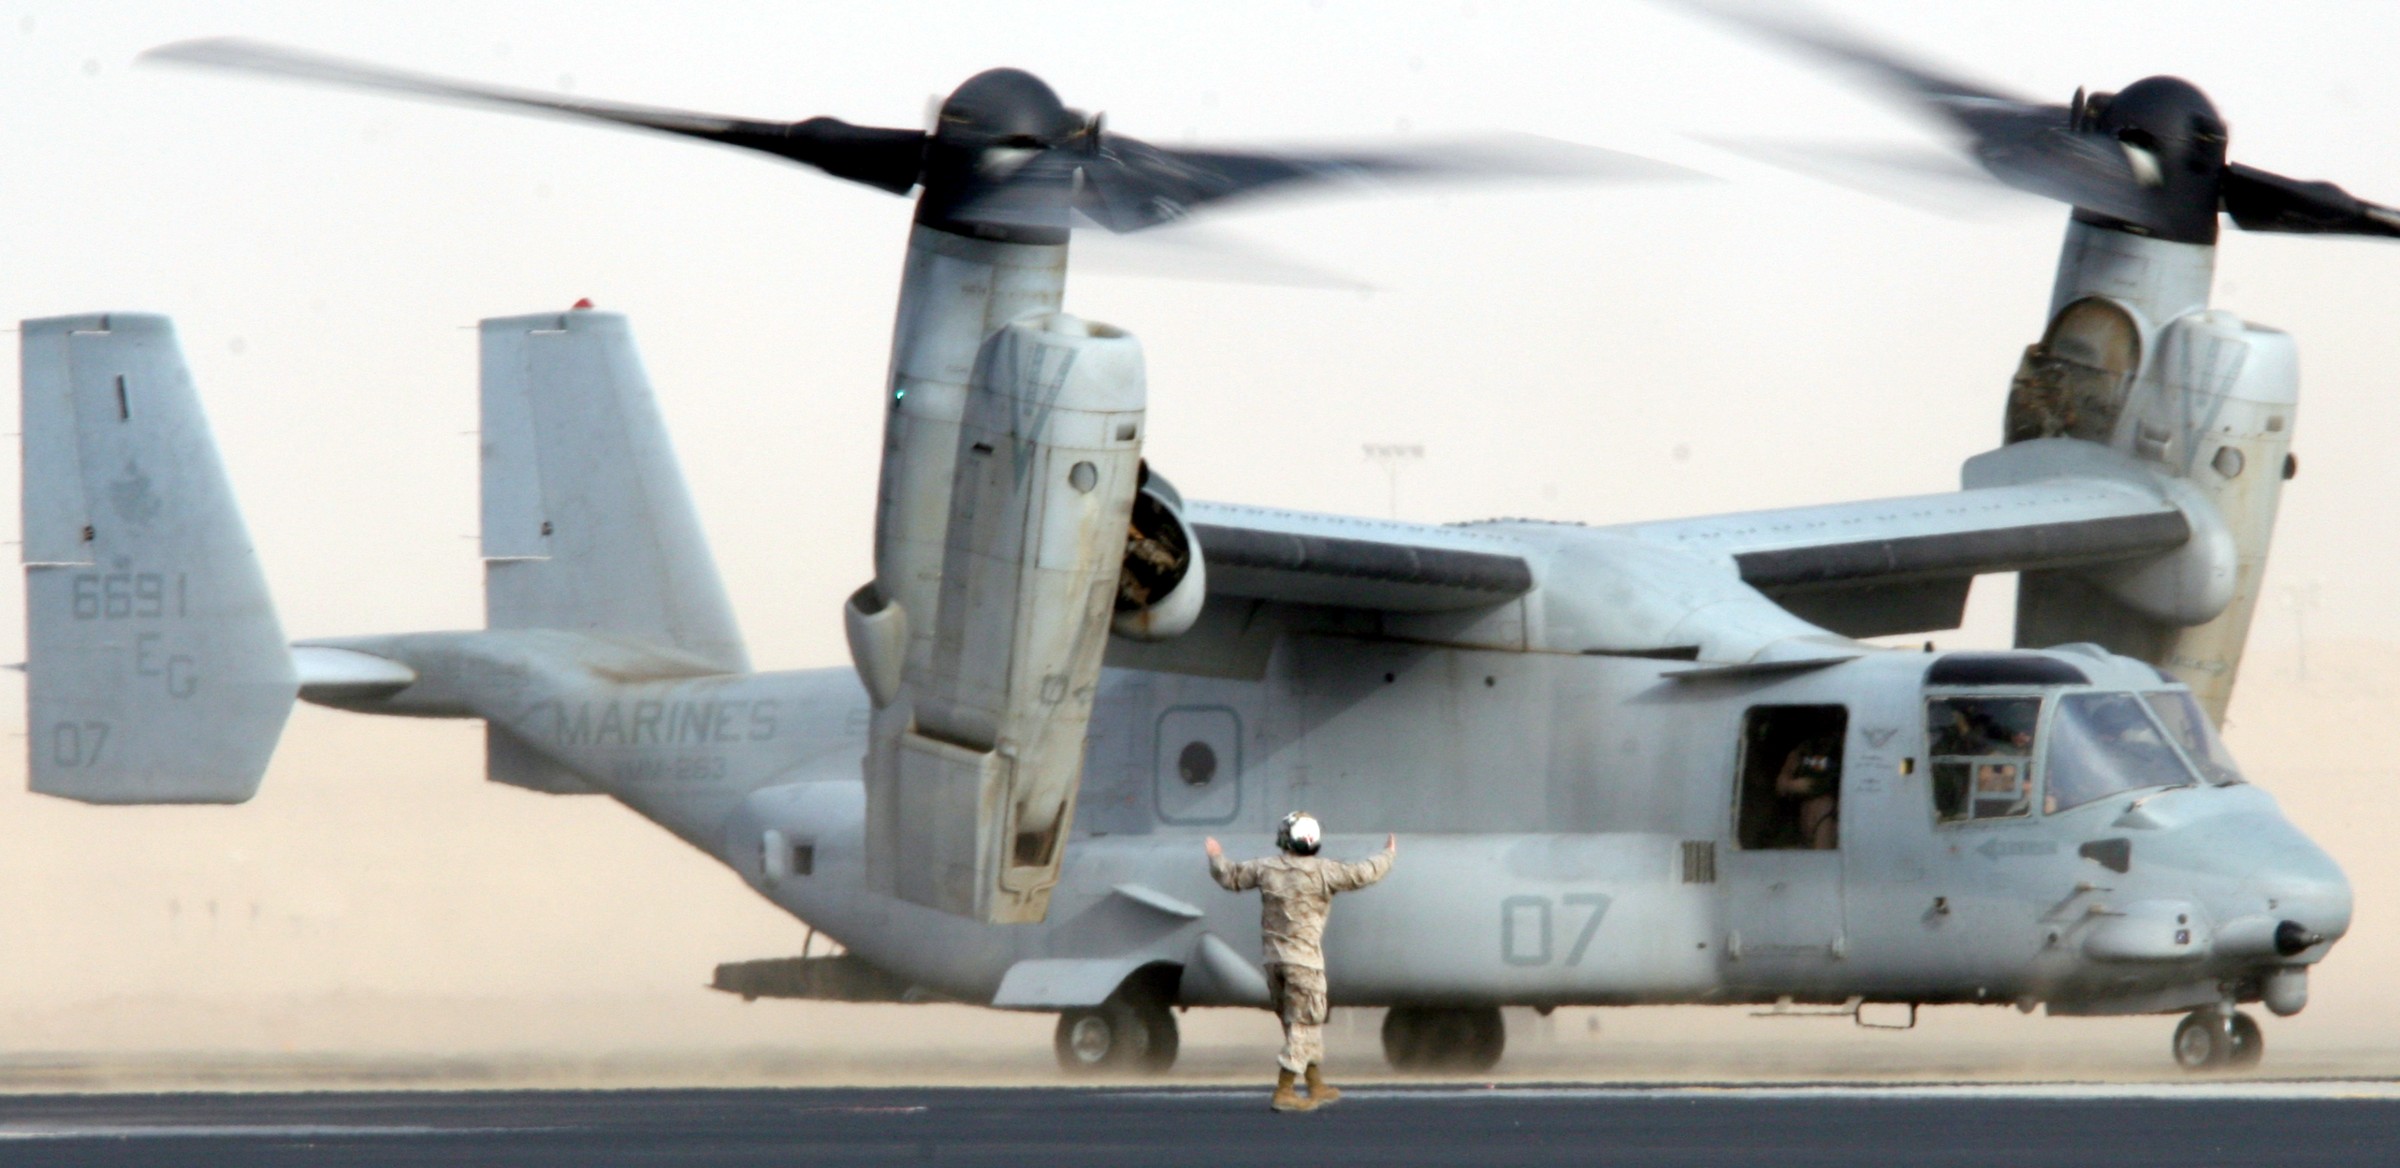 vmm-263 thunder chickens mv-22b osprey udairi army airfield kuwait 2009 103